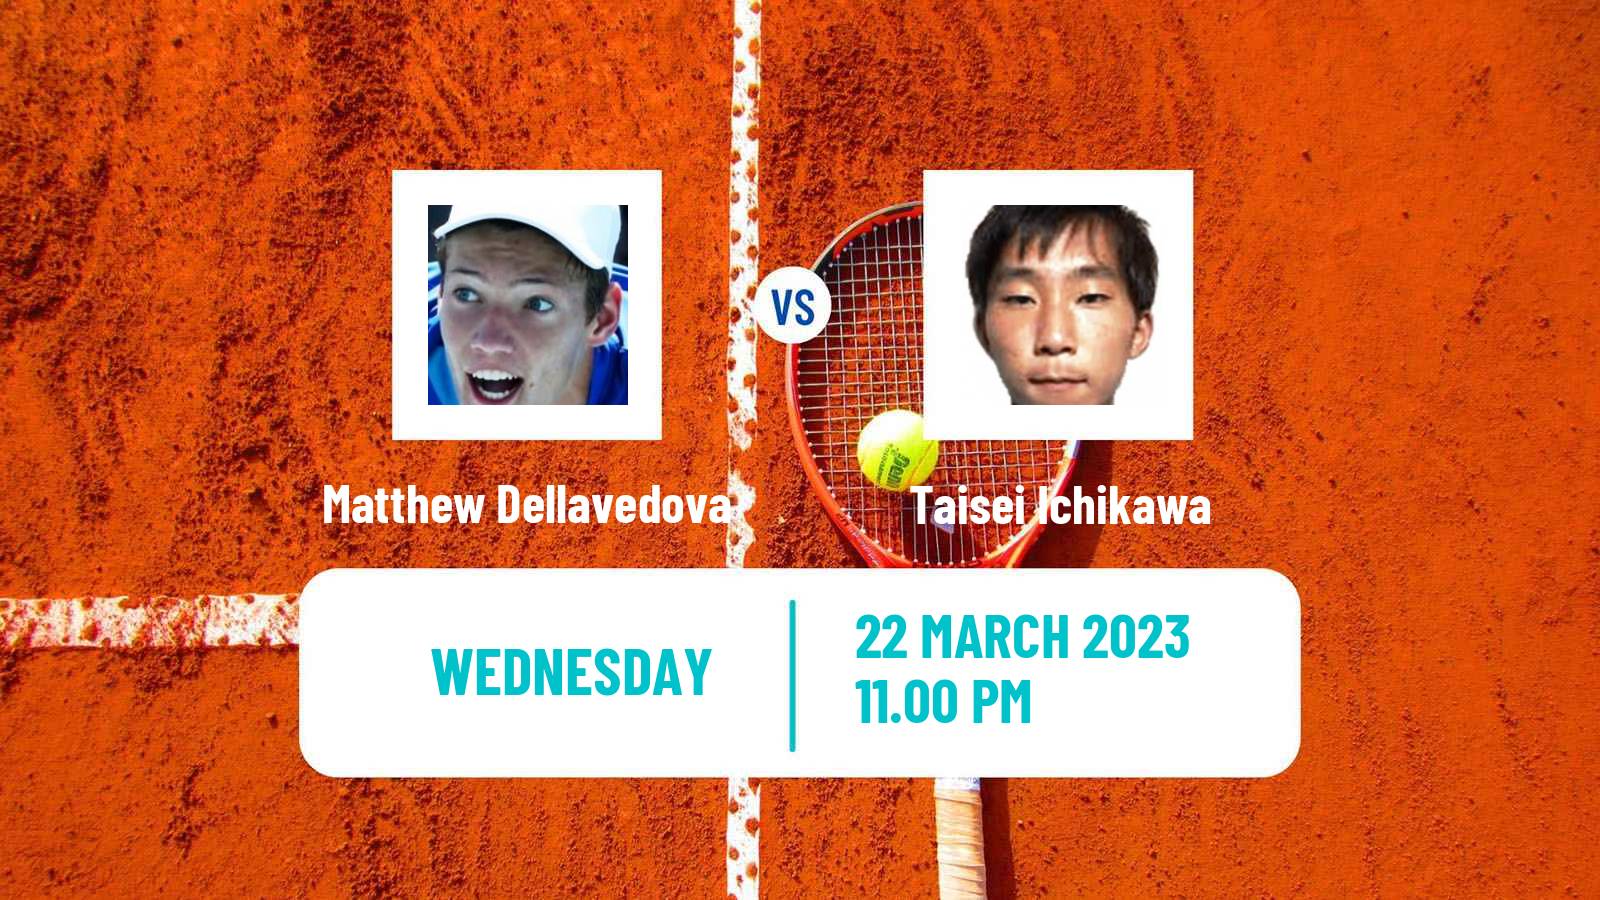 Tennis ITF Tournaments Matthew Dellavedova - Taisei Ichikawa